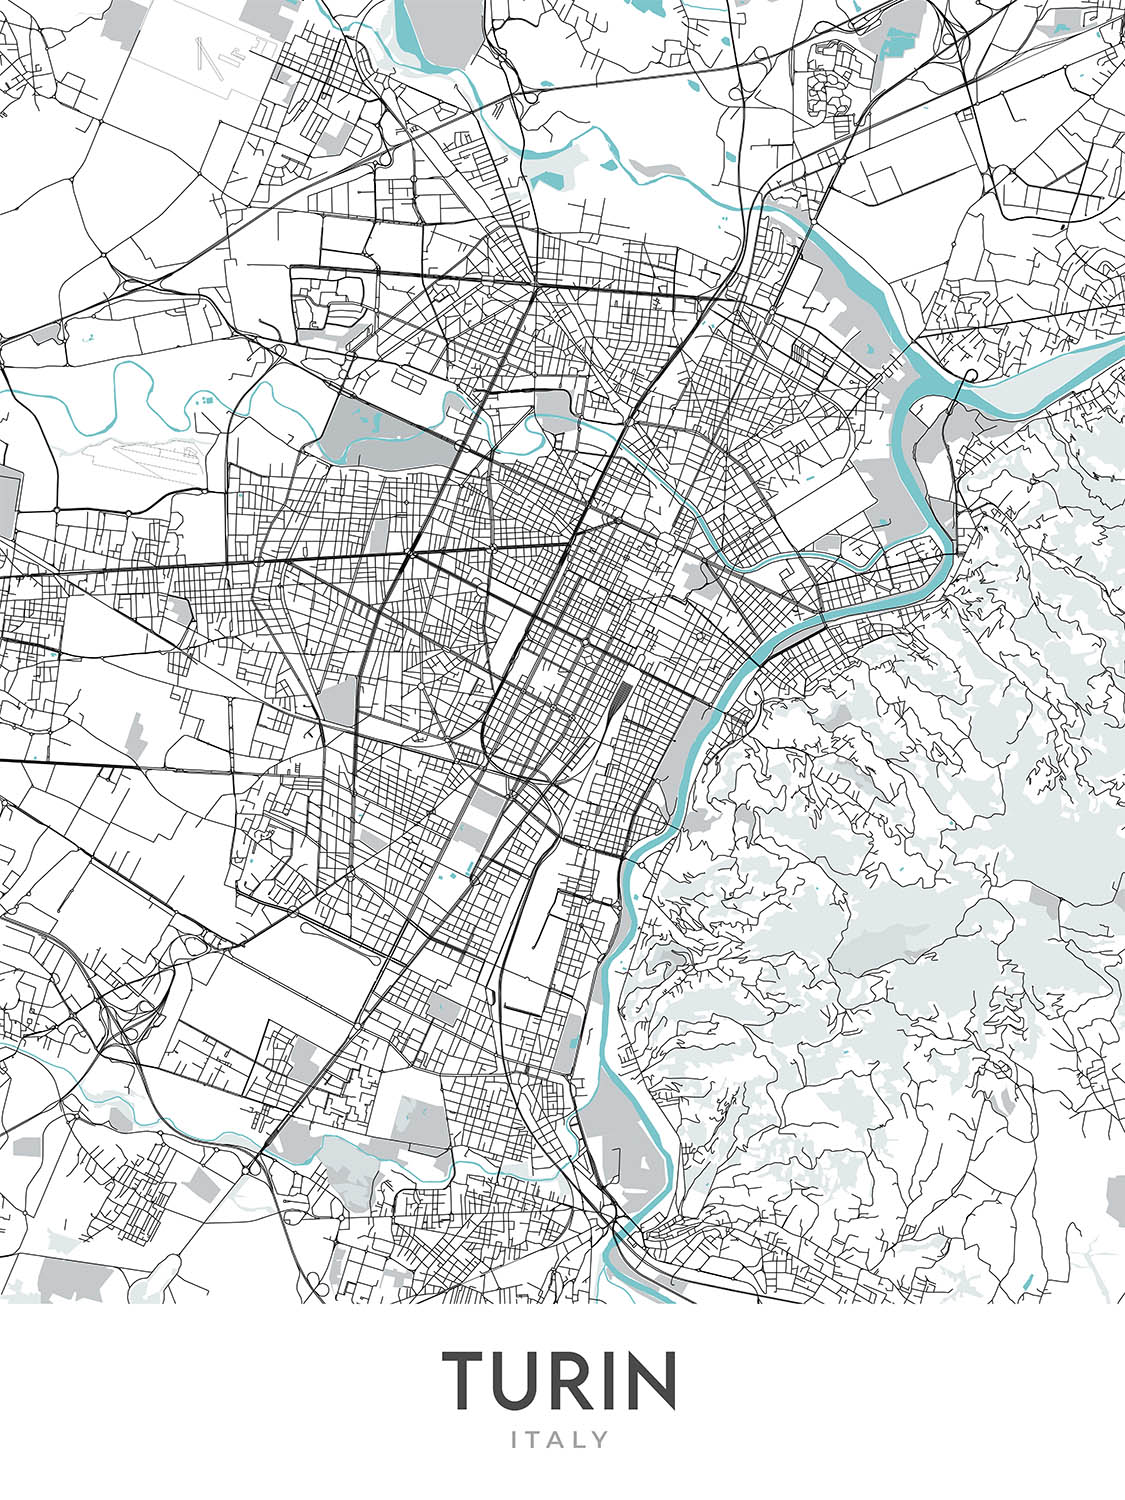 Modern City Map of Turin, Italy: Duomo, Mole, Egyptian Museum, Juventus Stadium, Basilica